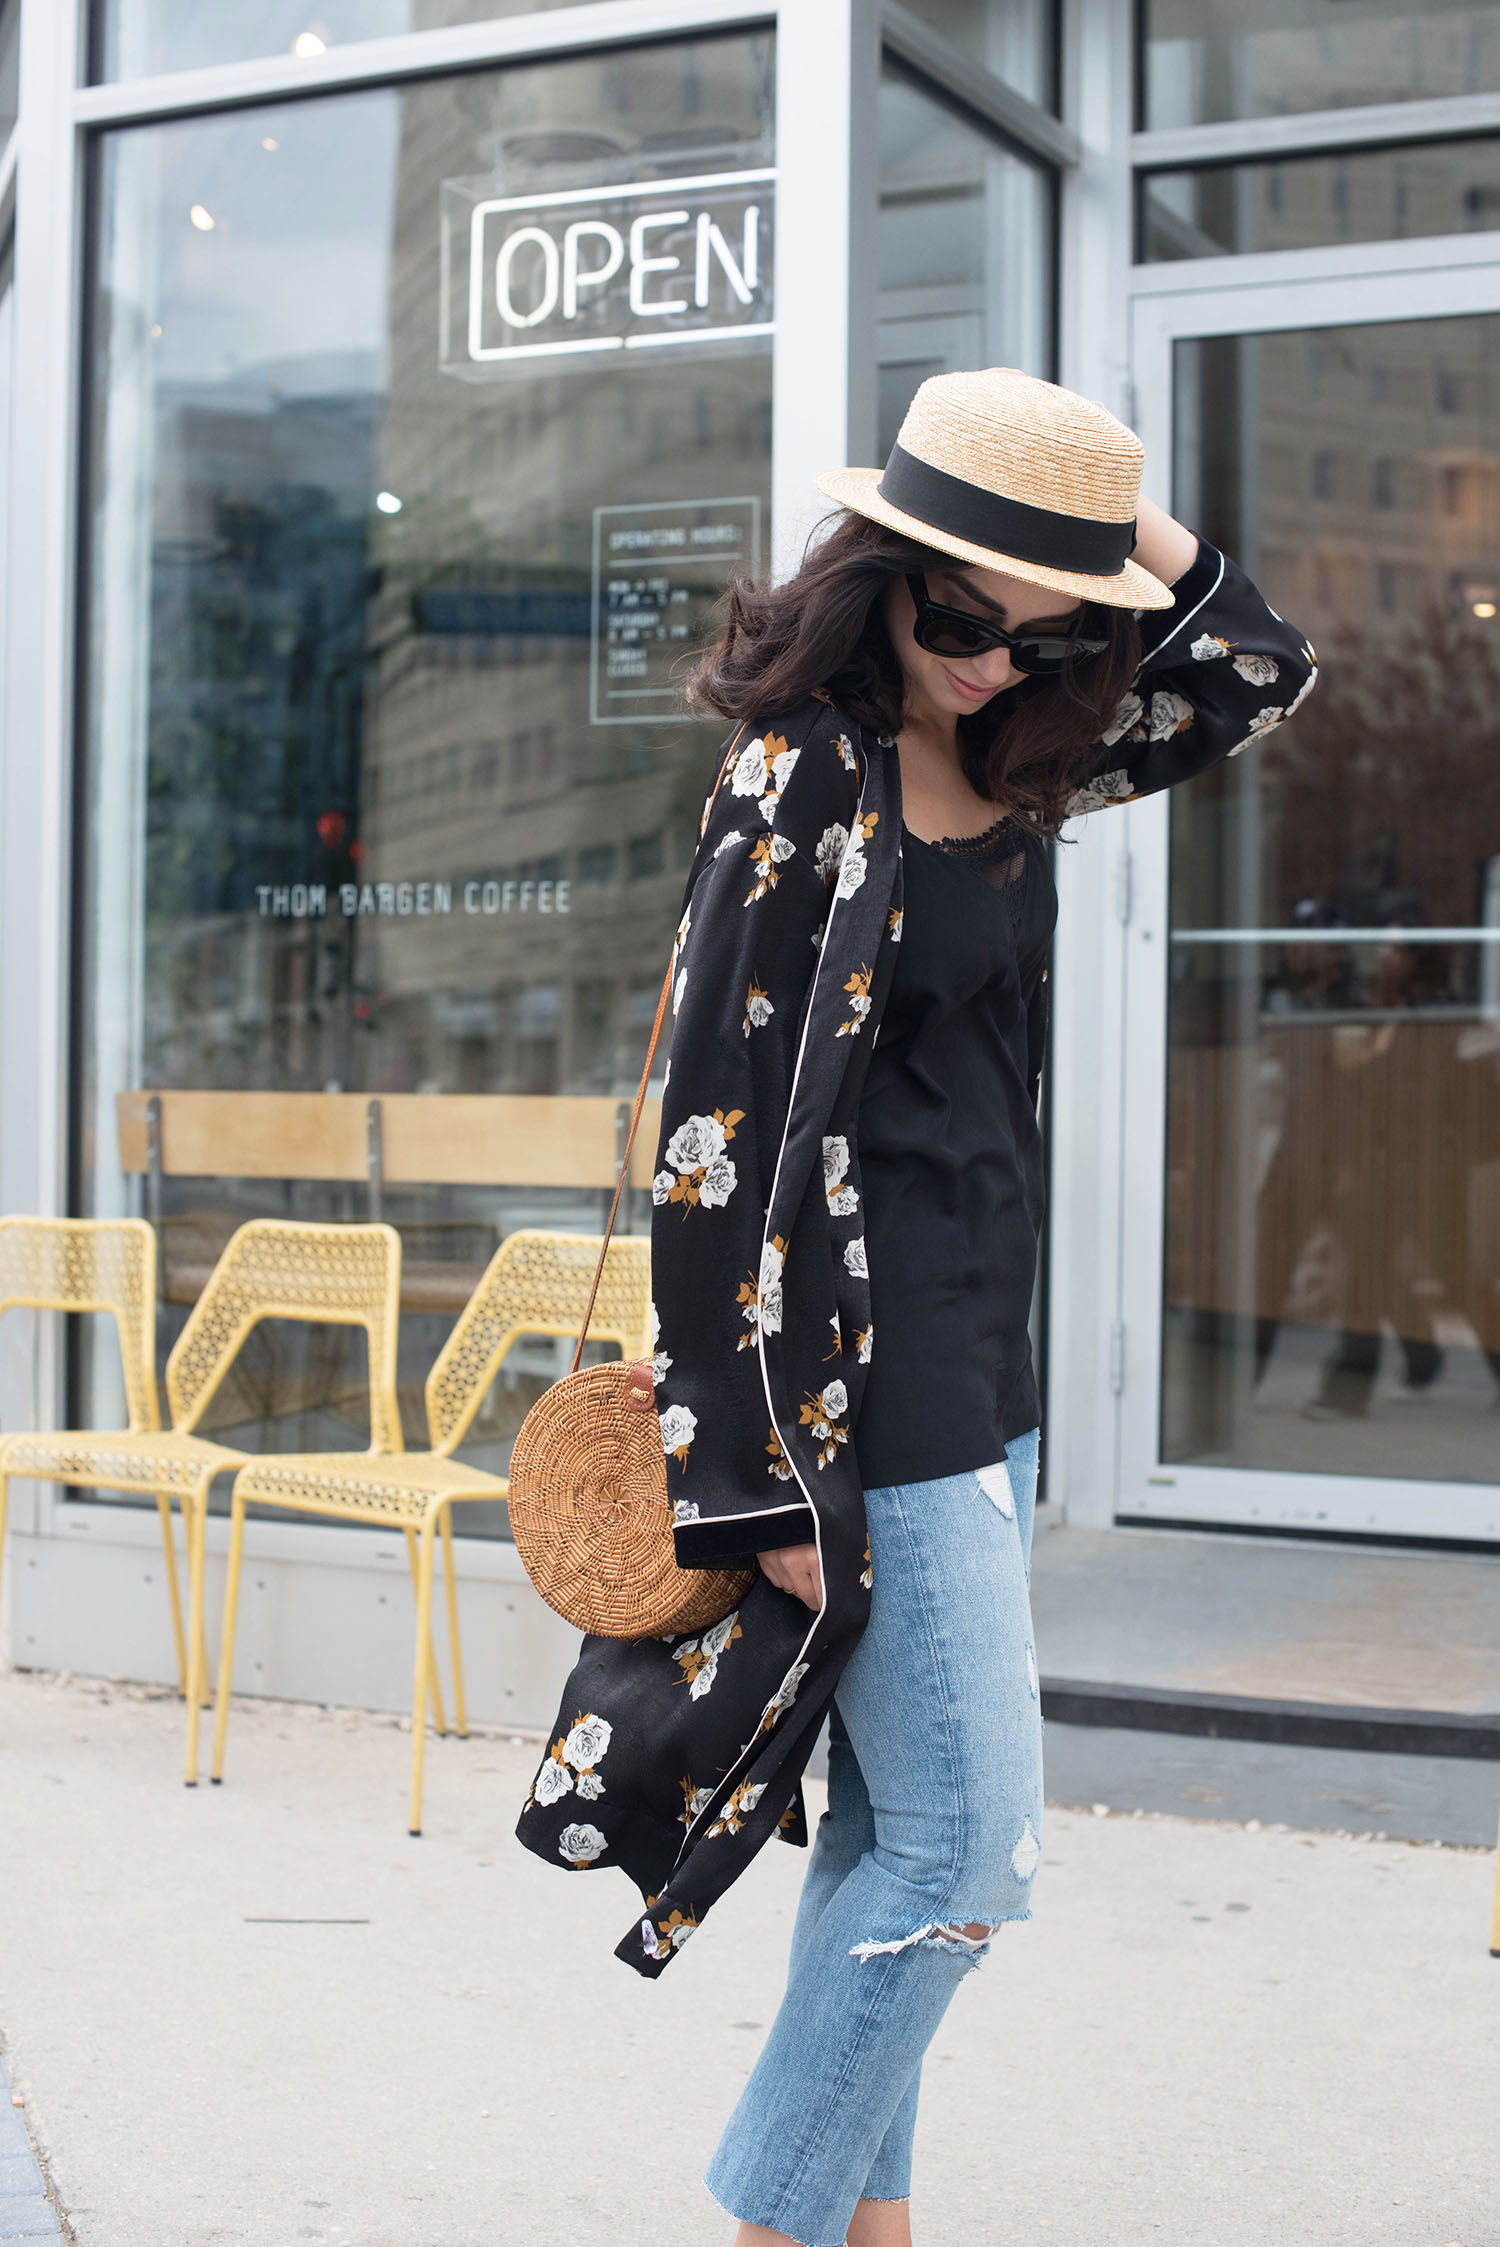 Fashion blogger Cee Fardoe of Coco & Vera holds onto her straw hat outside Thom Bargan coffee, wearing Grlfrnd Karolina jeans and a Zara black kimono